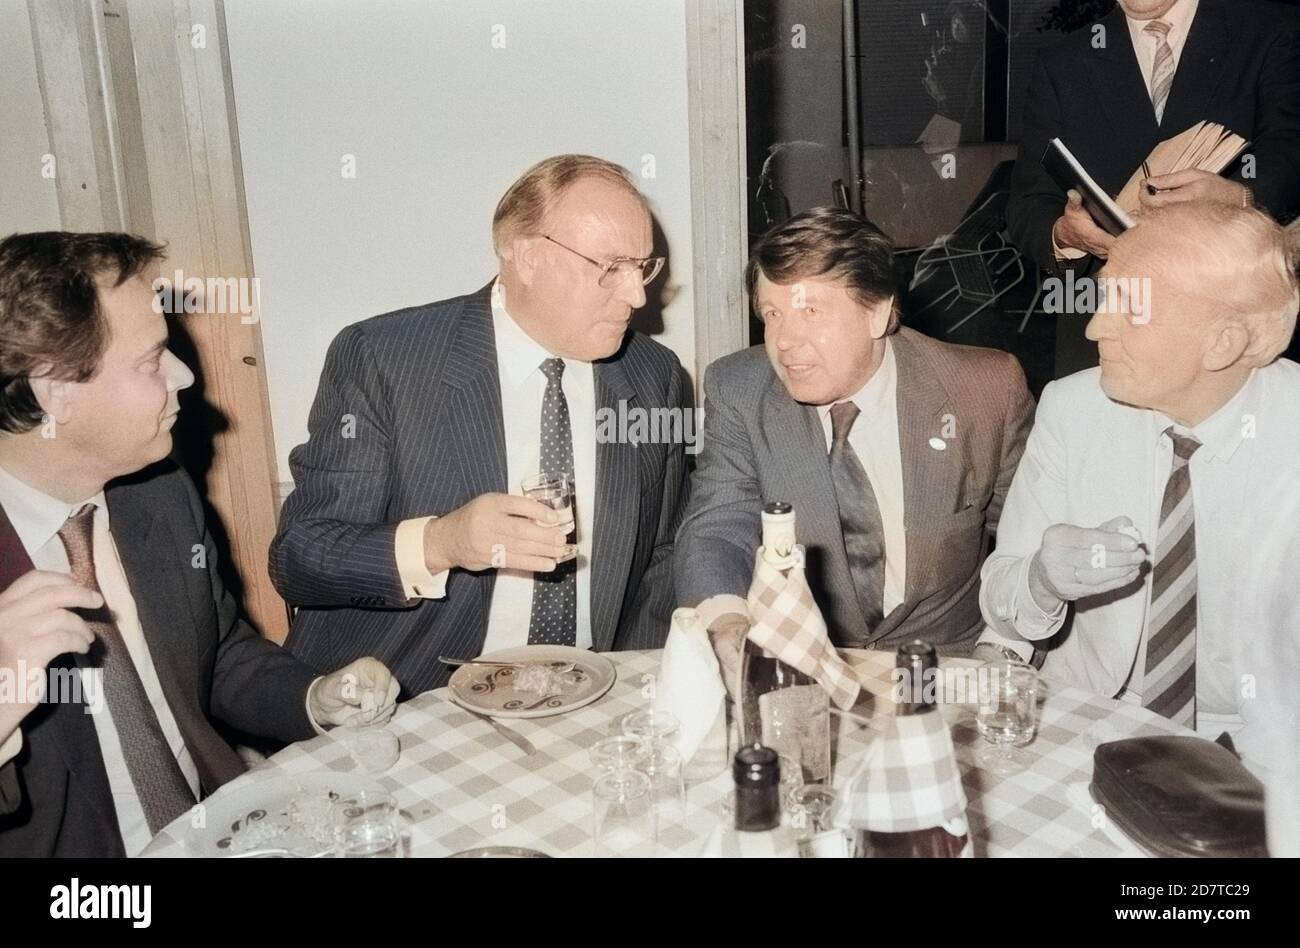 Helmut Kohl, deutscher Bundeskanzler (Mitte), einem bein Essen en Hamburg, Deutschland um 1984. Le chancelier allemand Helmut Kohl (centre), en train de dîner à Hambourg, en Allemagne autour de 1984. Banque D'Images